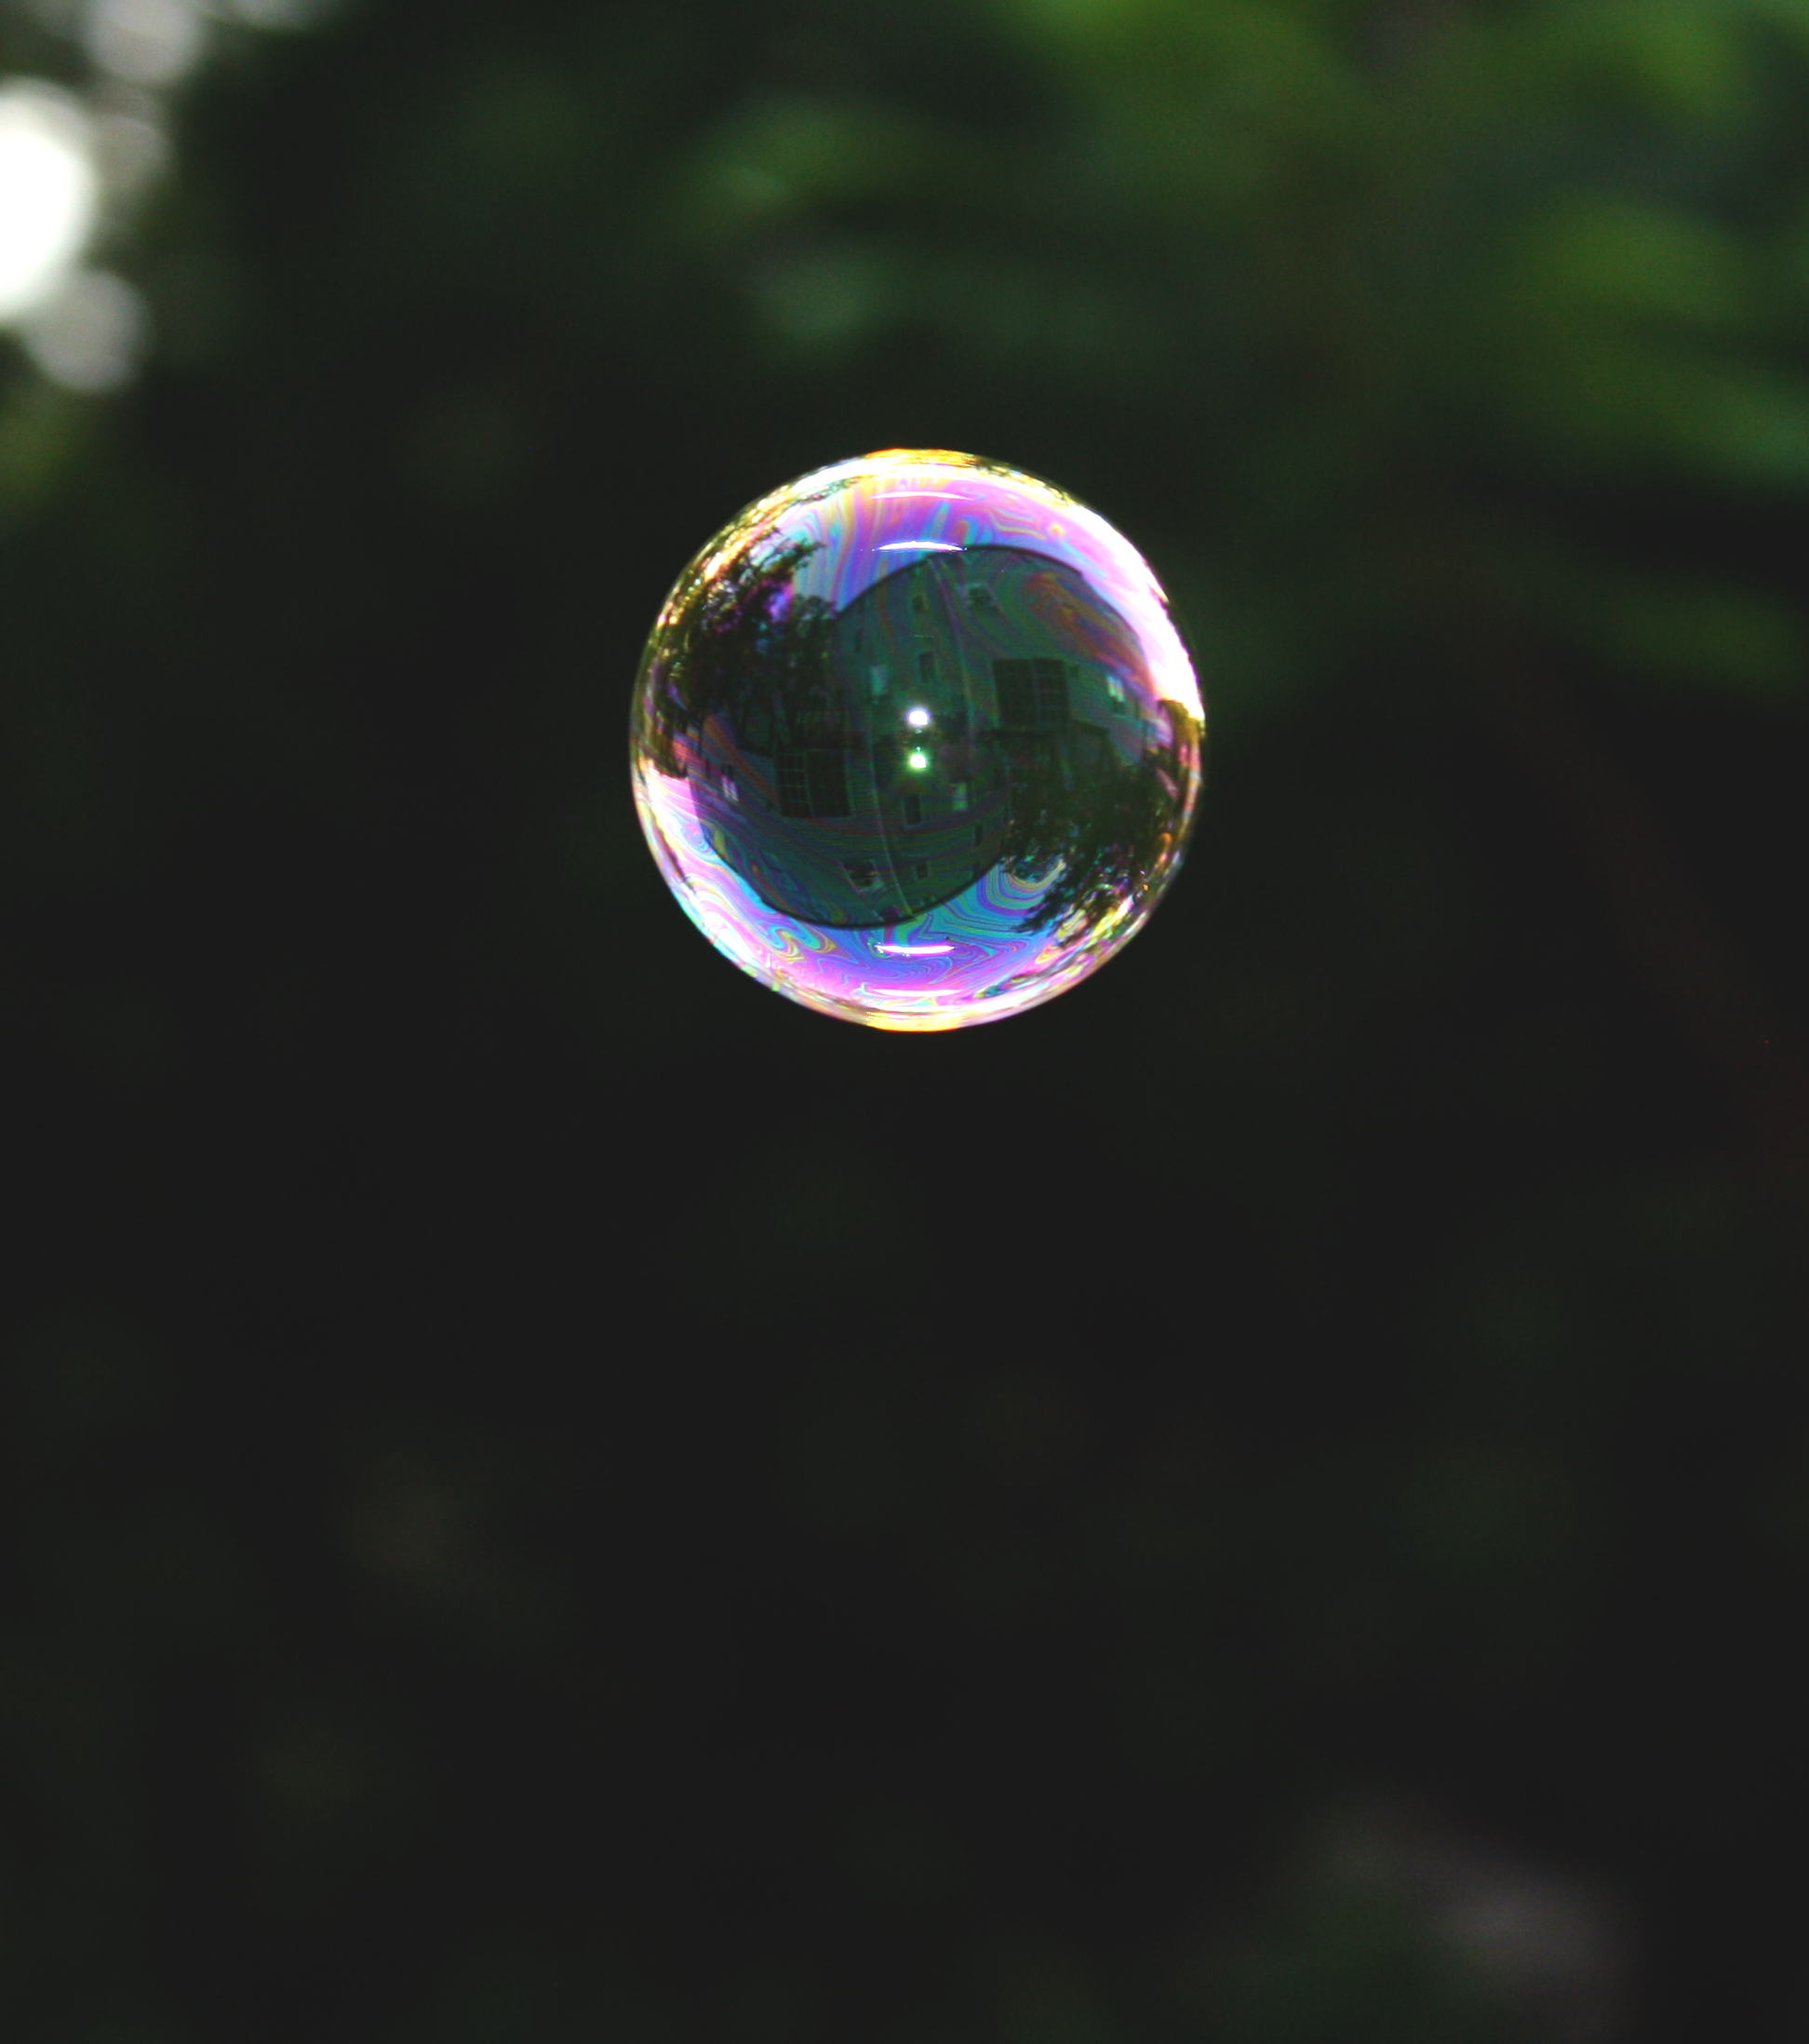 Water Droplet macro image - Free stock photo - Public Domain photo ...